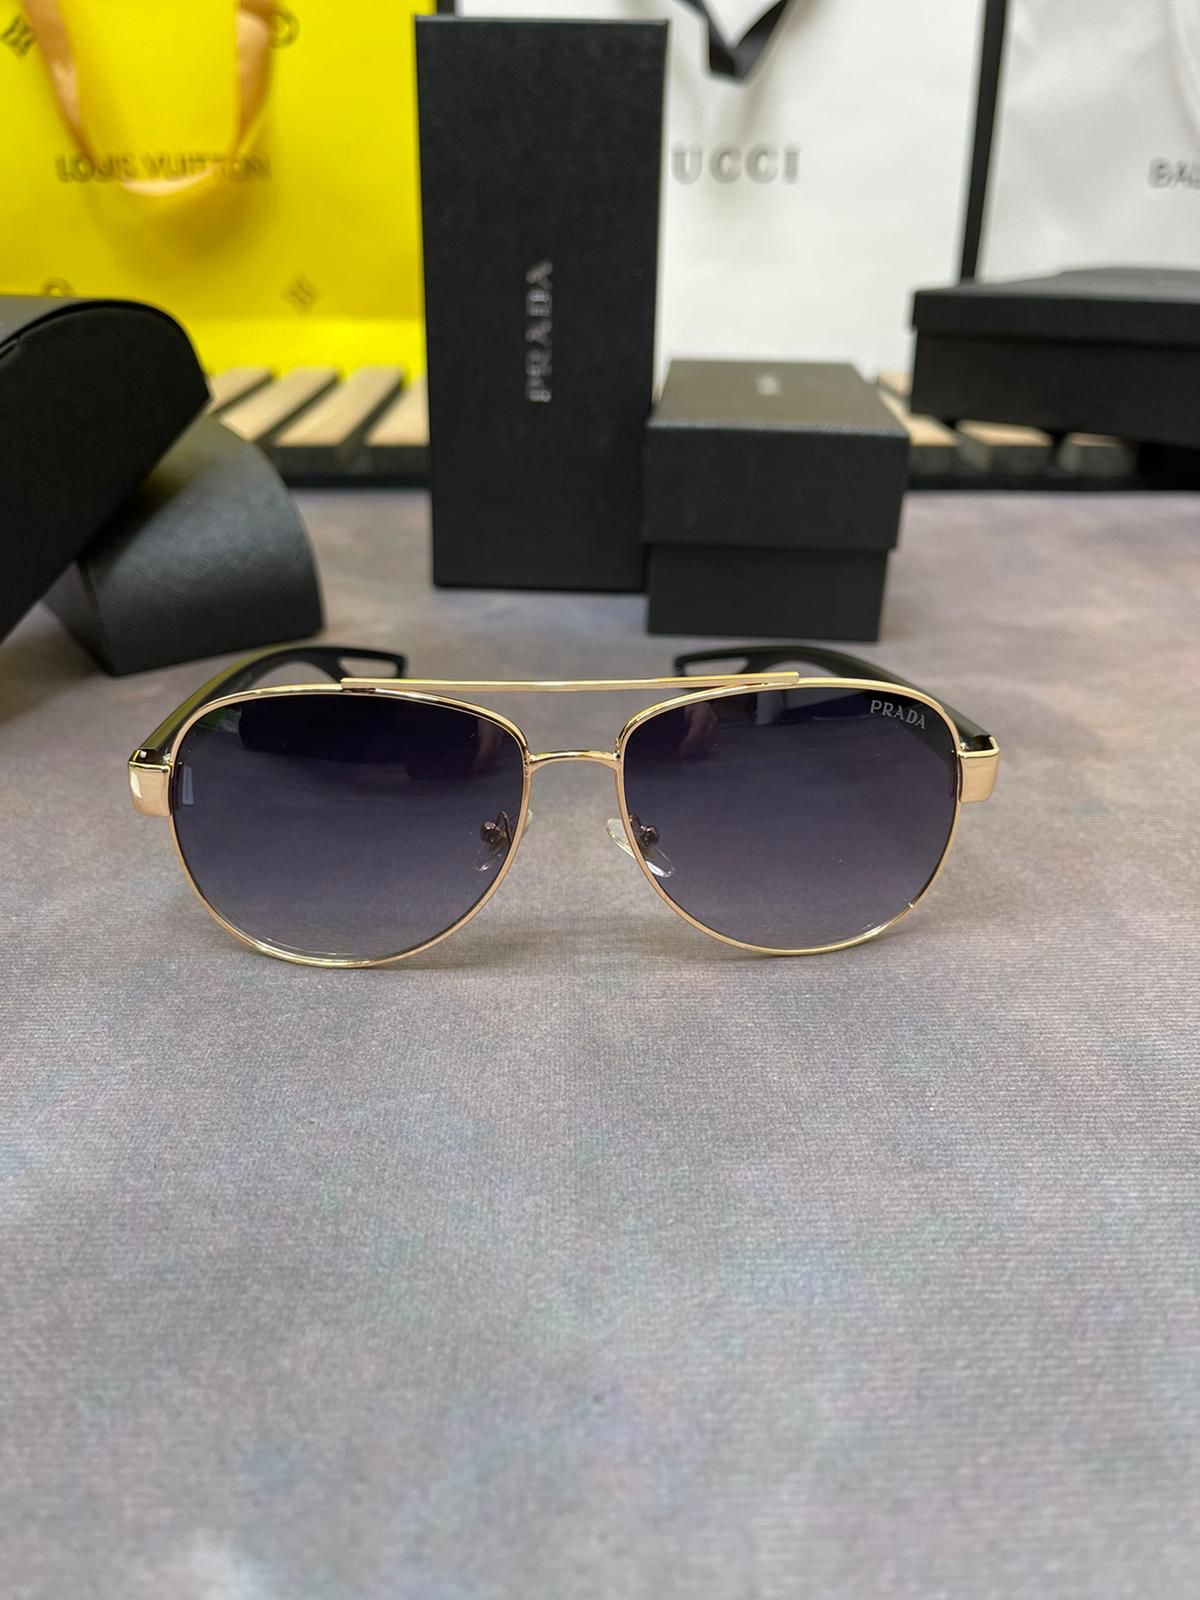 Prda inspired sunglasses